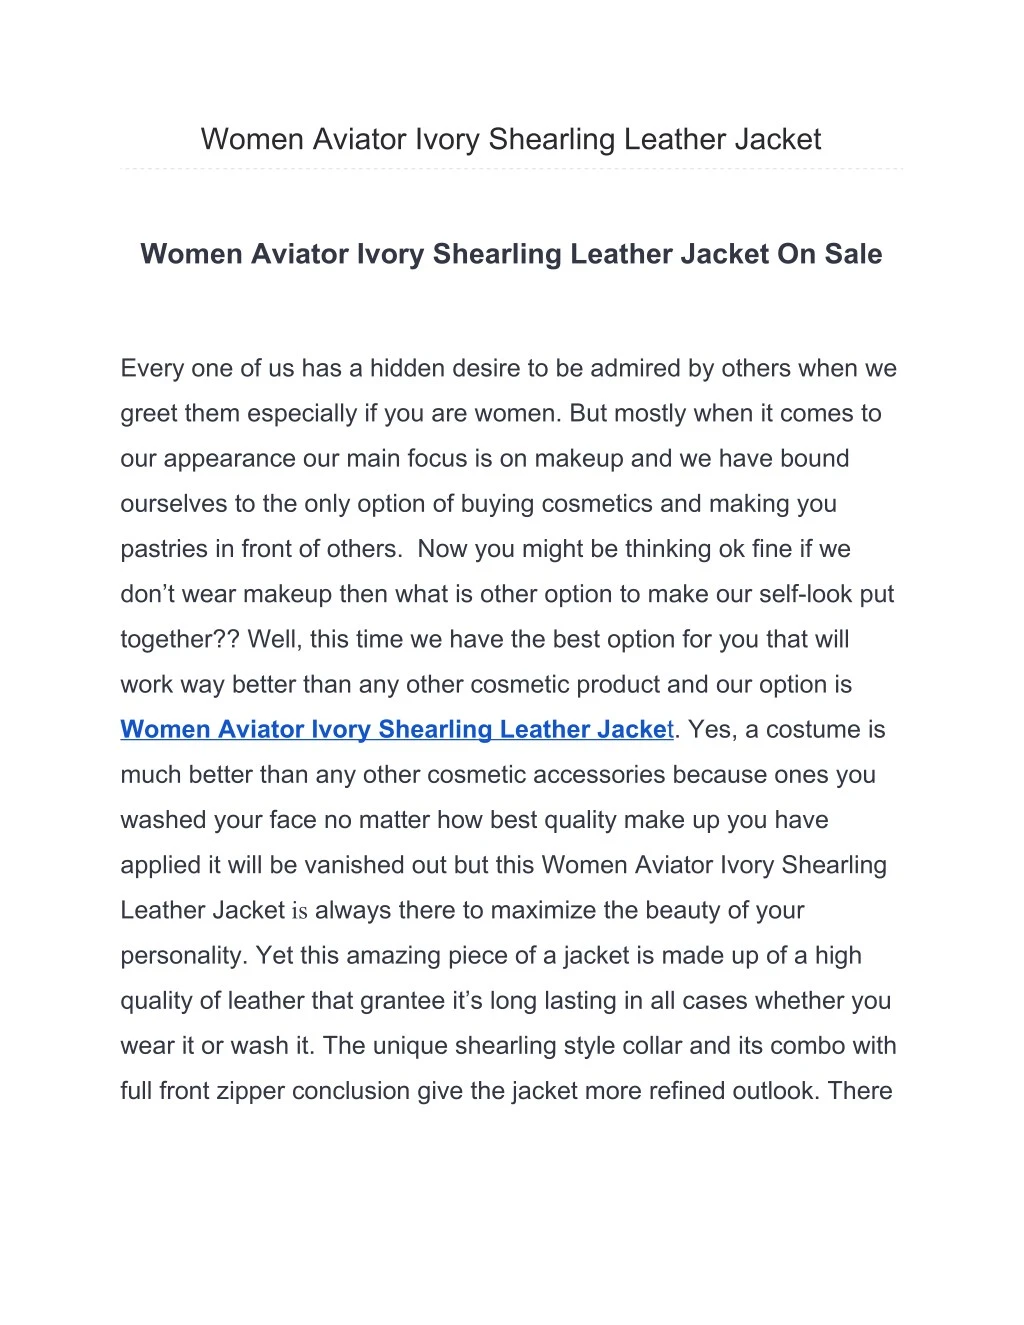 women aviator ivory shearling leather jacket